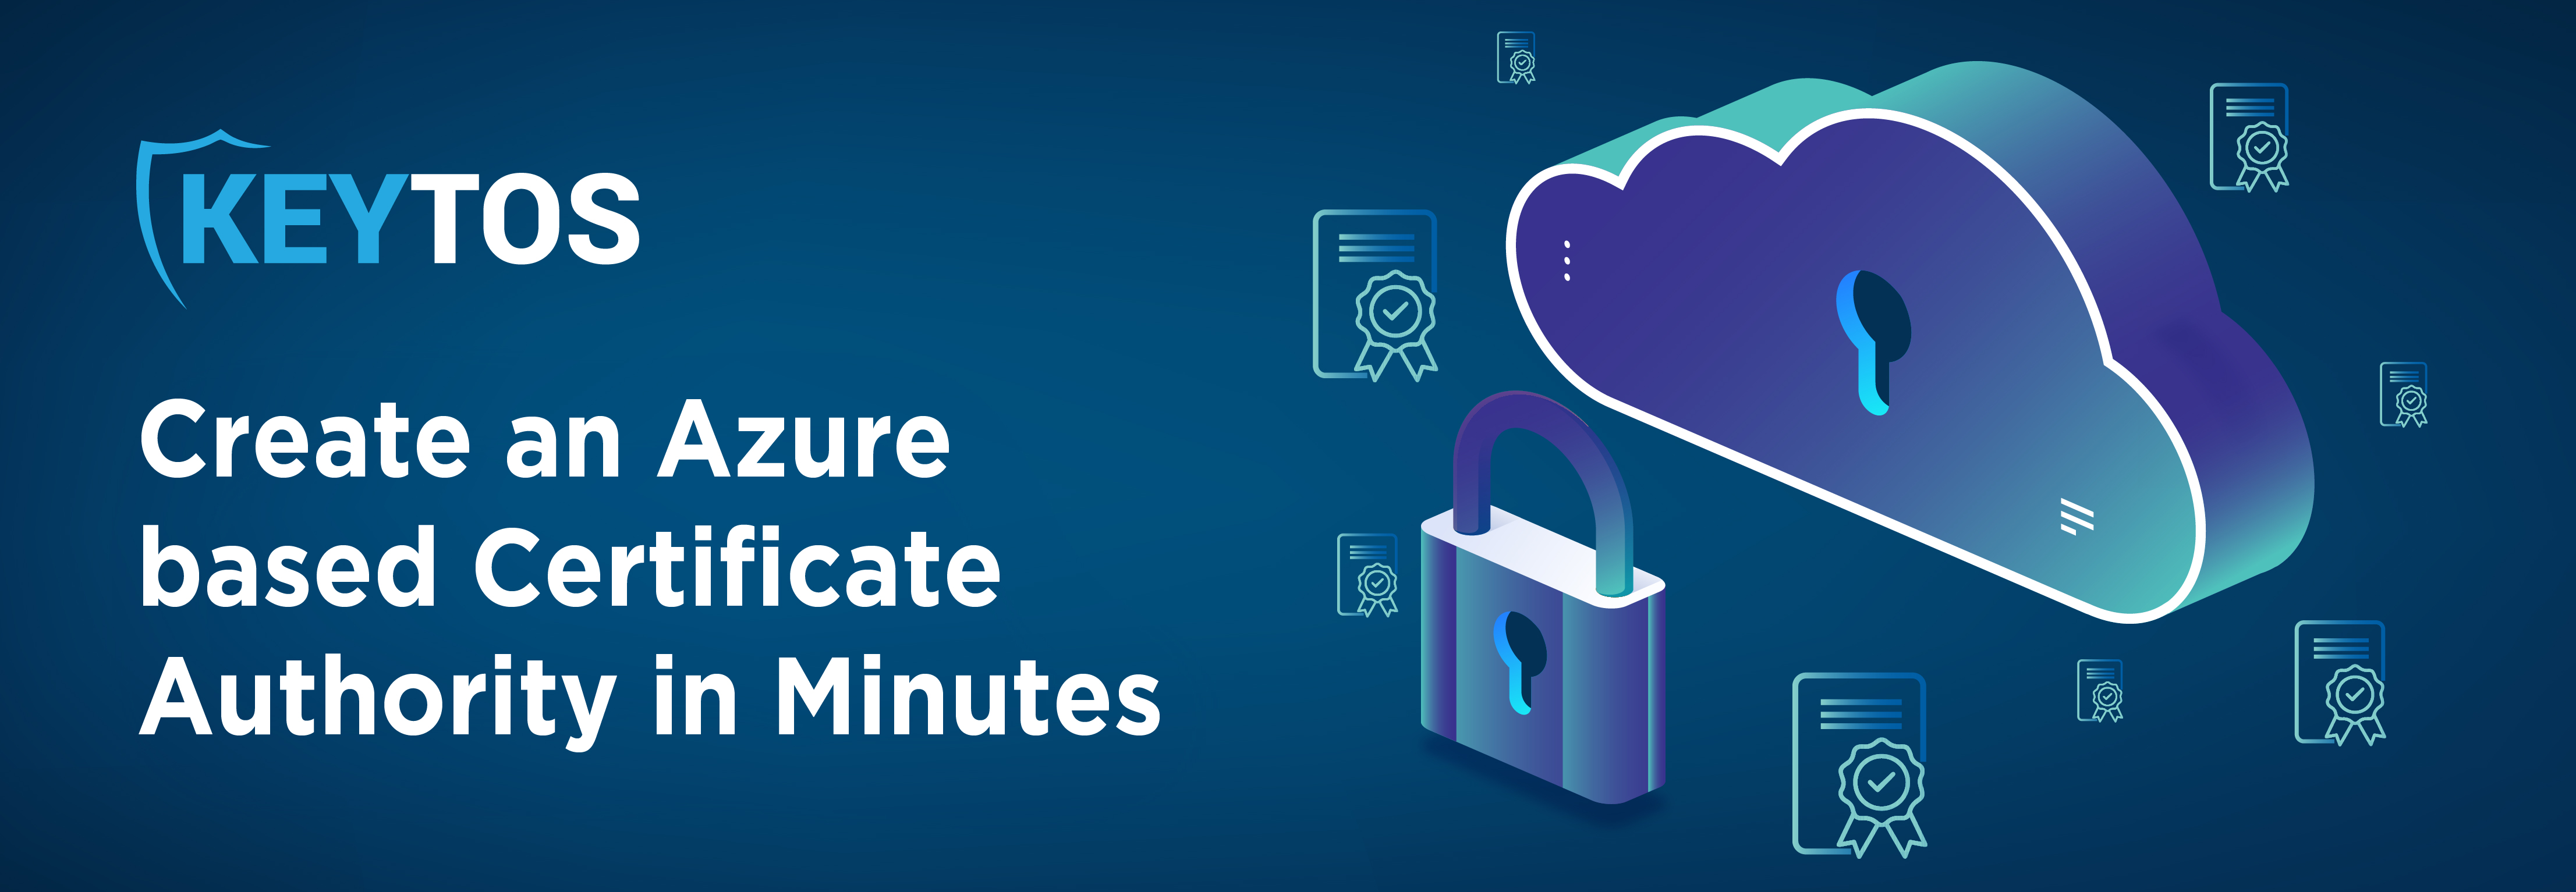 Create an Azure-based CA in minutes. Create an Azure-based Certificate Authority in minutes. How to Deploy a CA in Azure. How to Deploy a Certificate Authority in Azure.